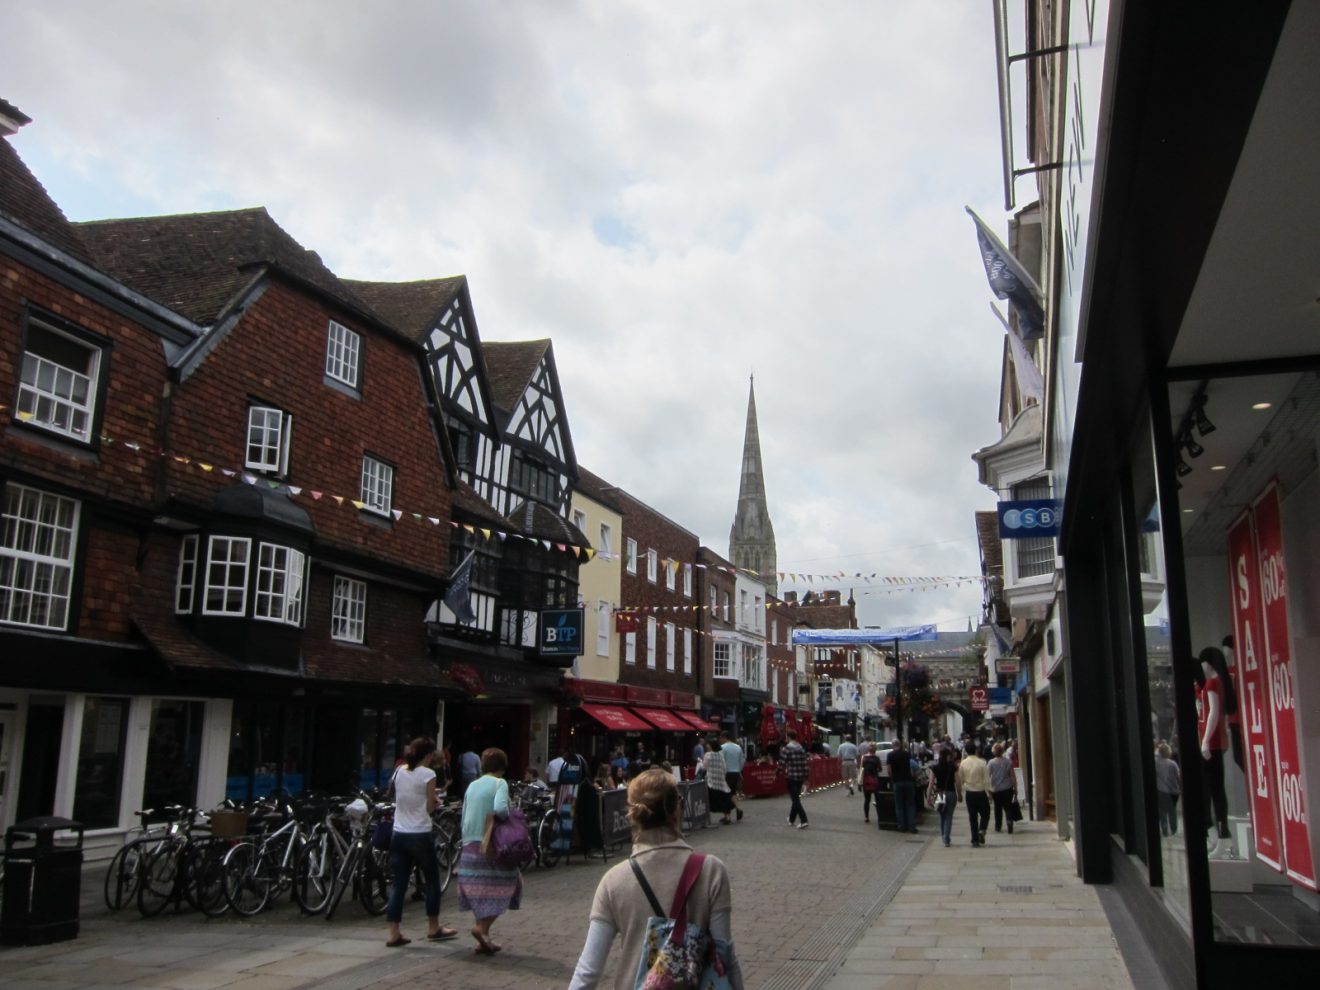 Sites in Salisbury - A Trivia Quiz from Anne N